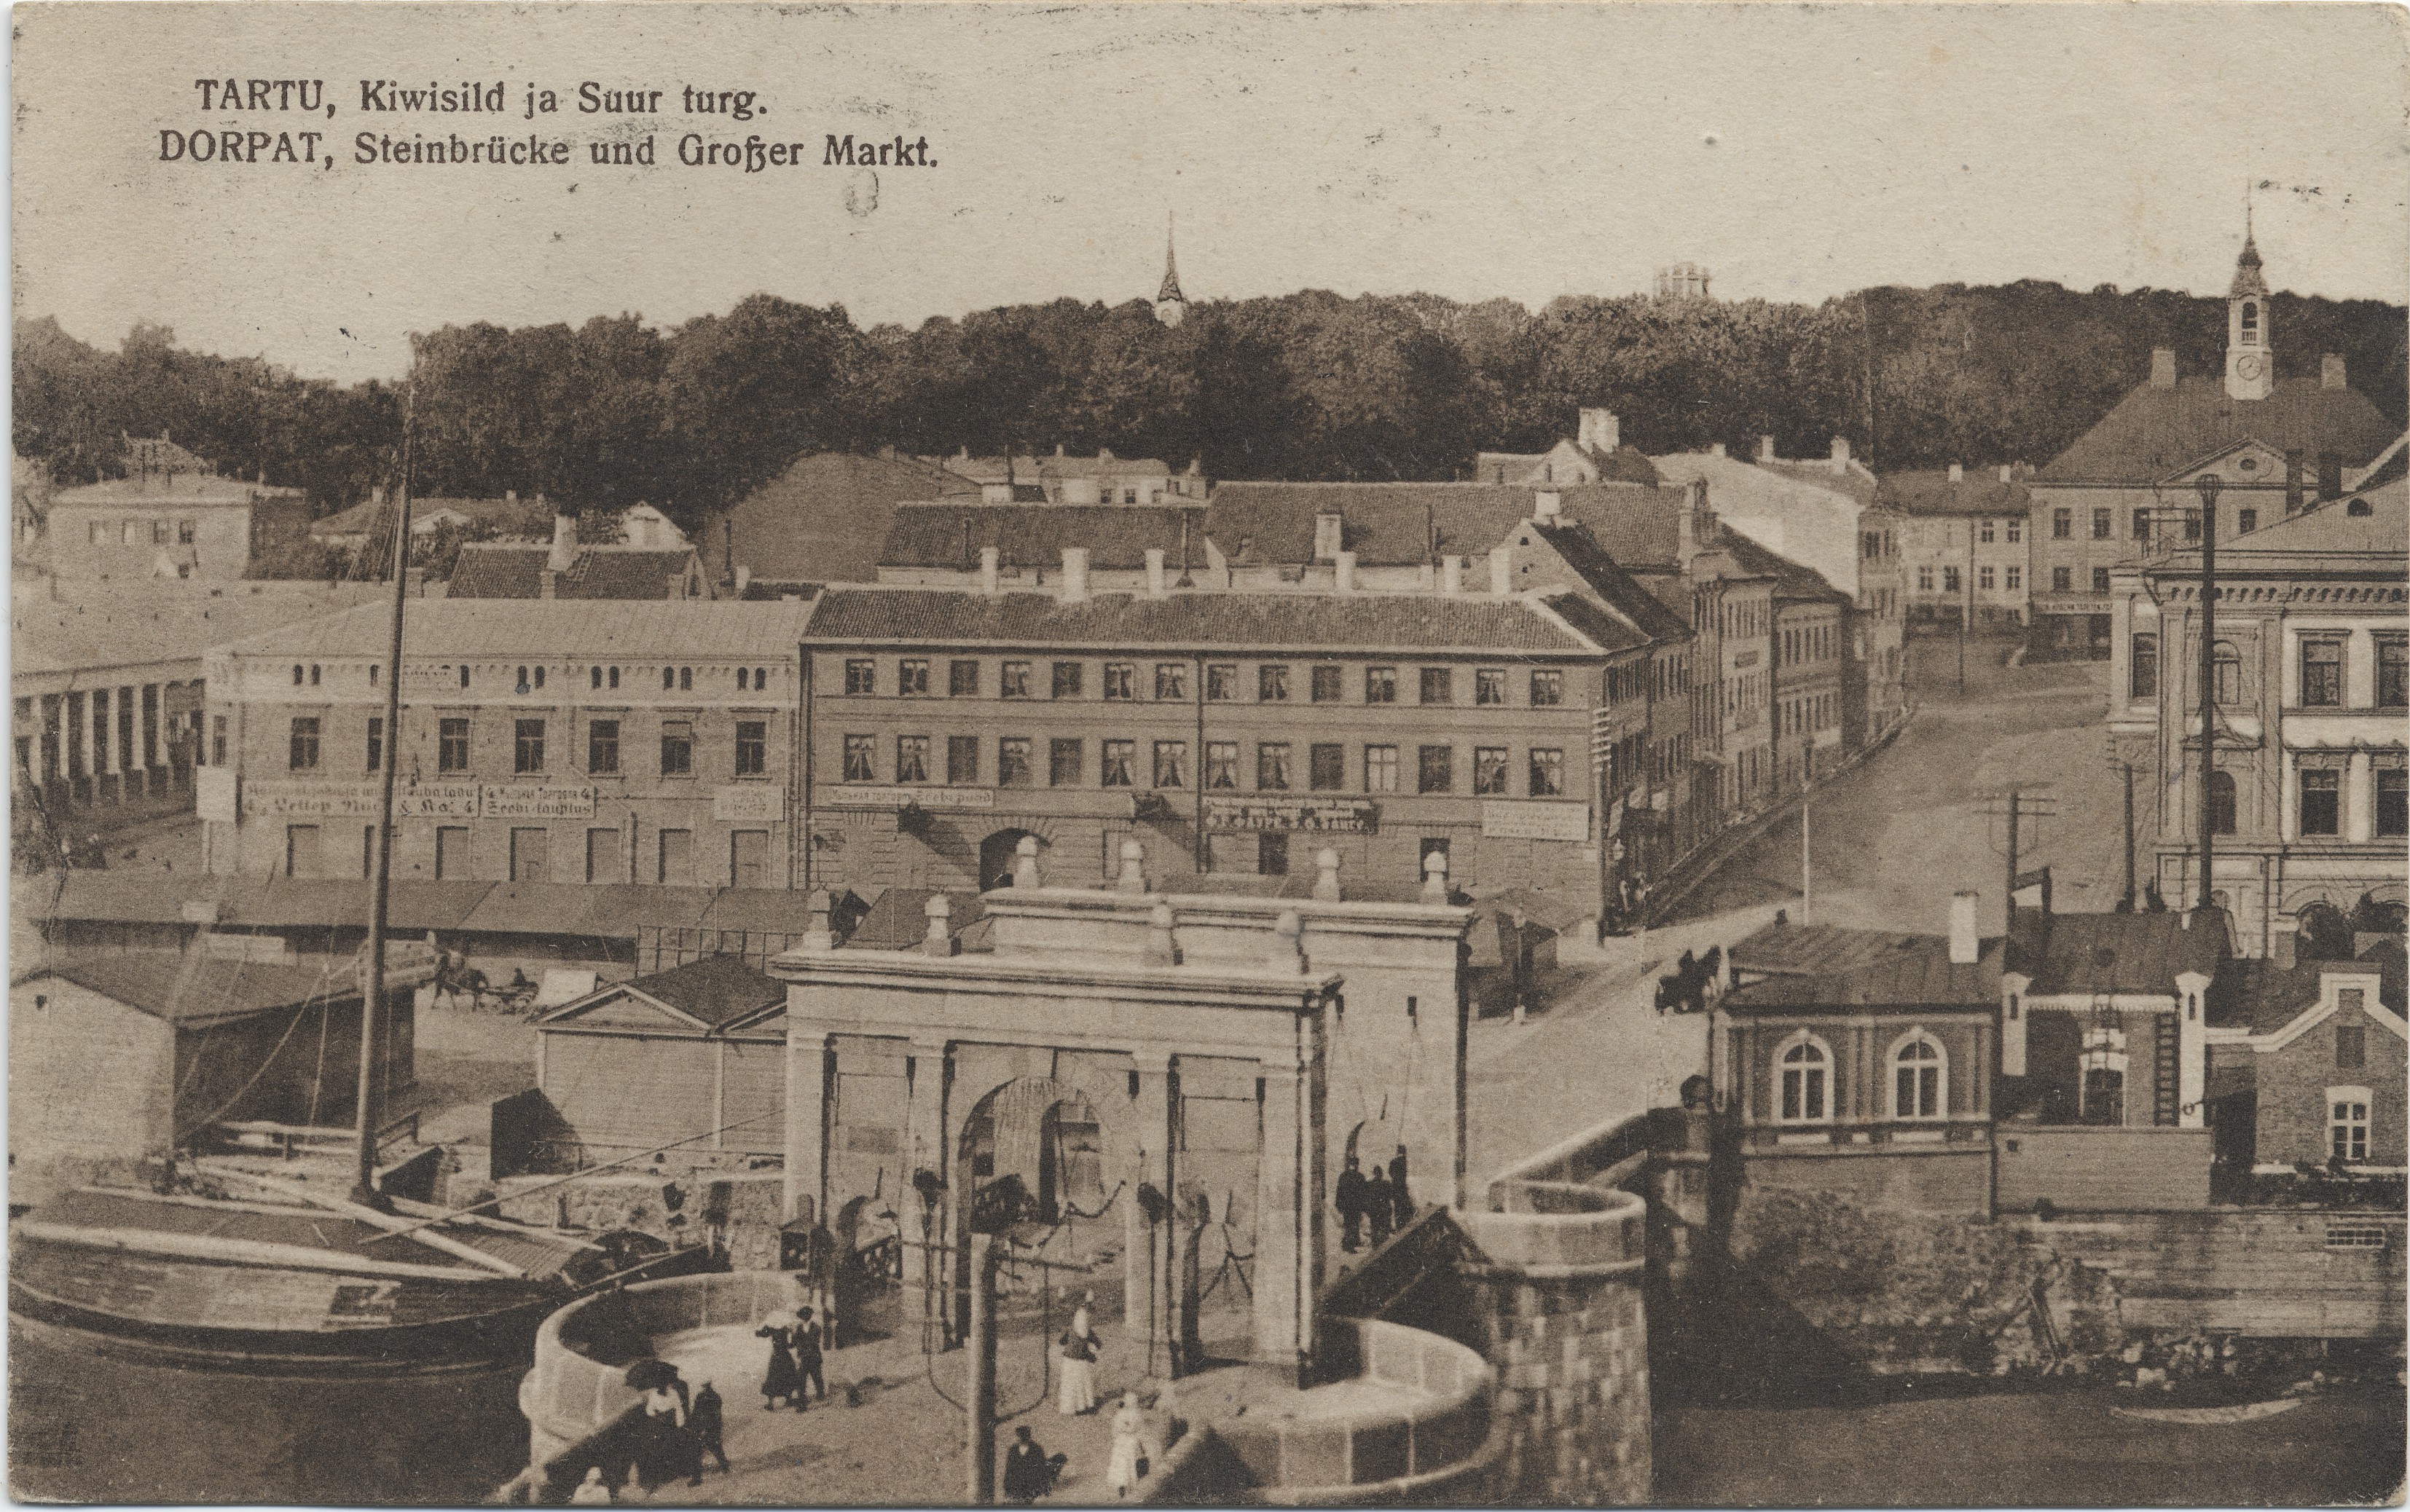 Tartu : Kiwisild and Great Market = Dorpat : Stein Bridge and Great Market